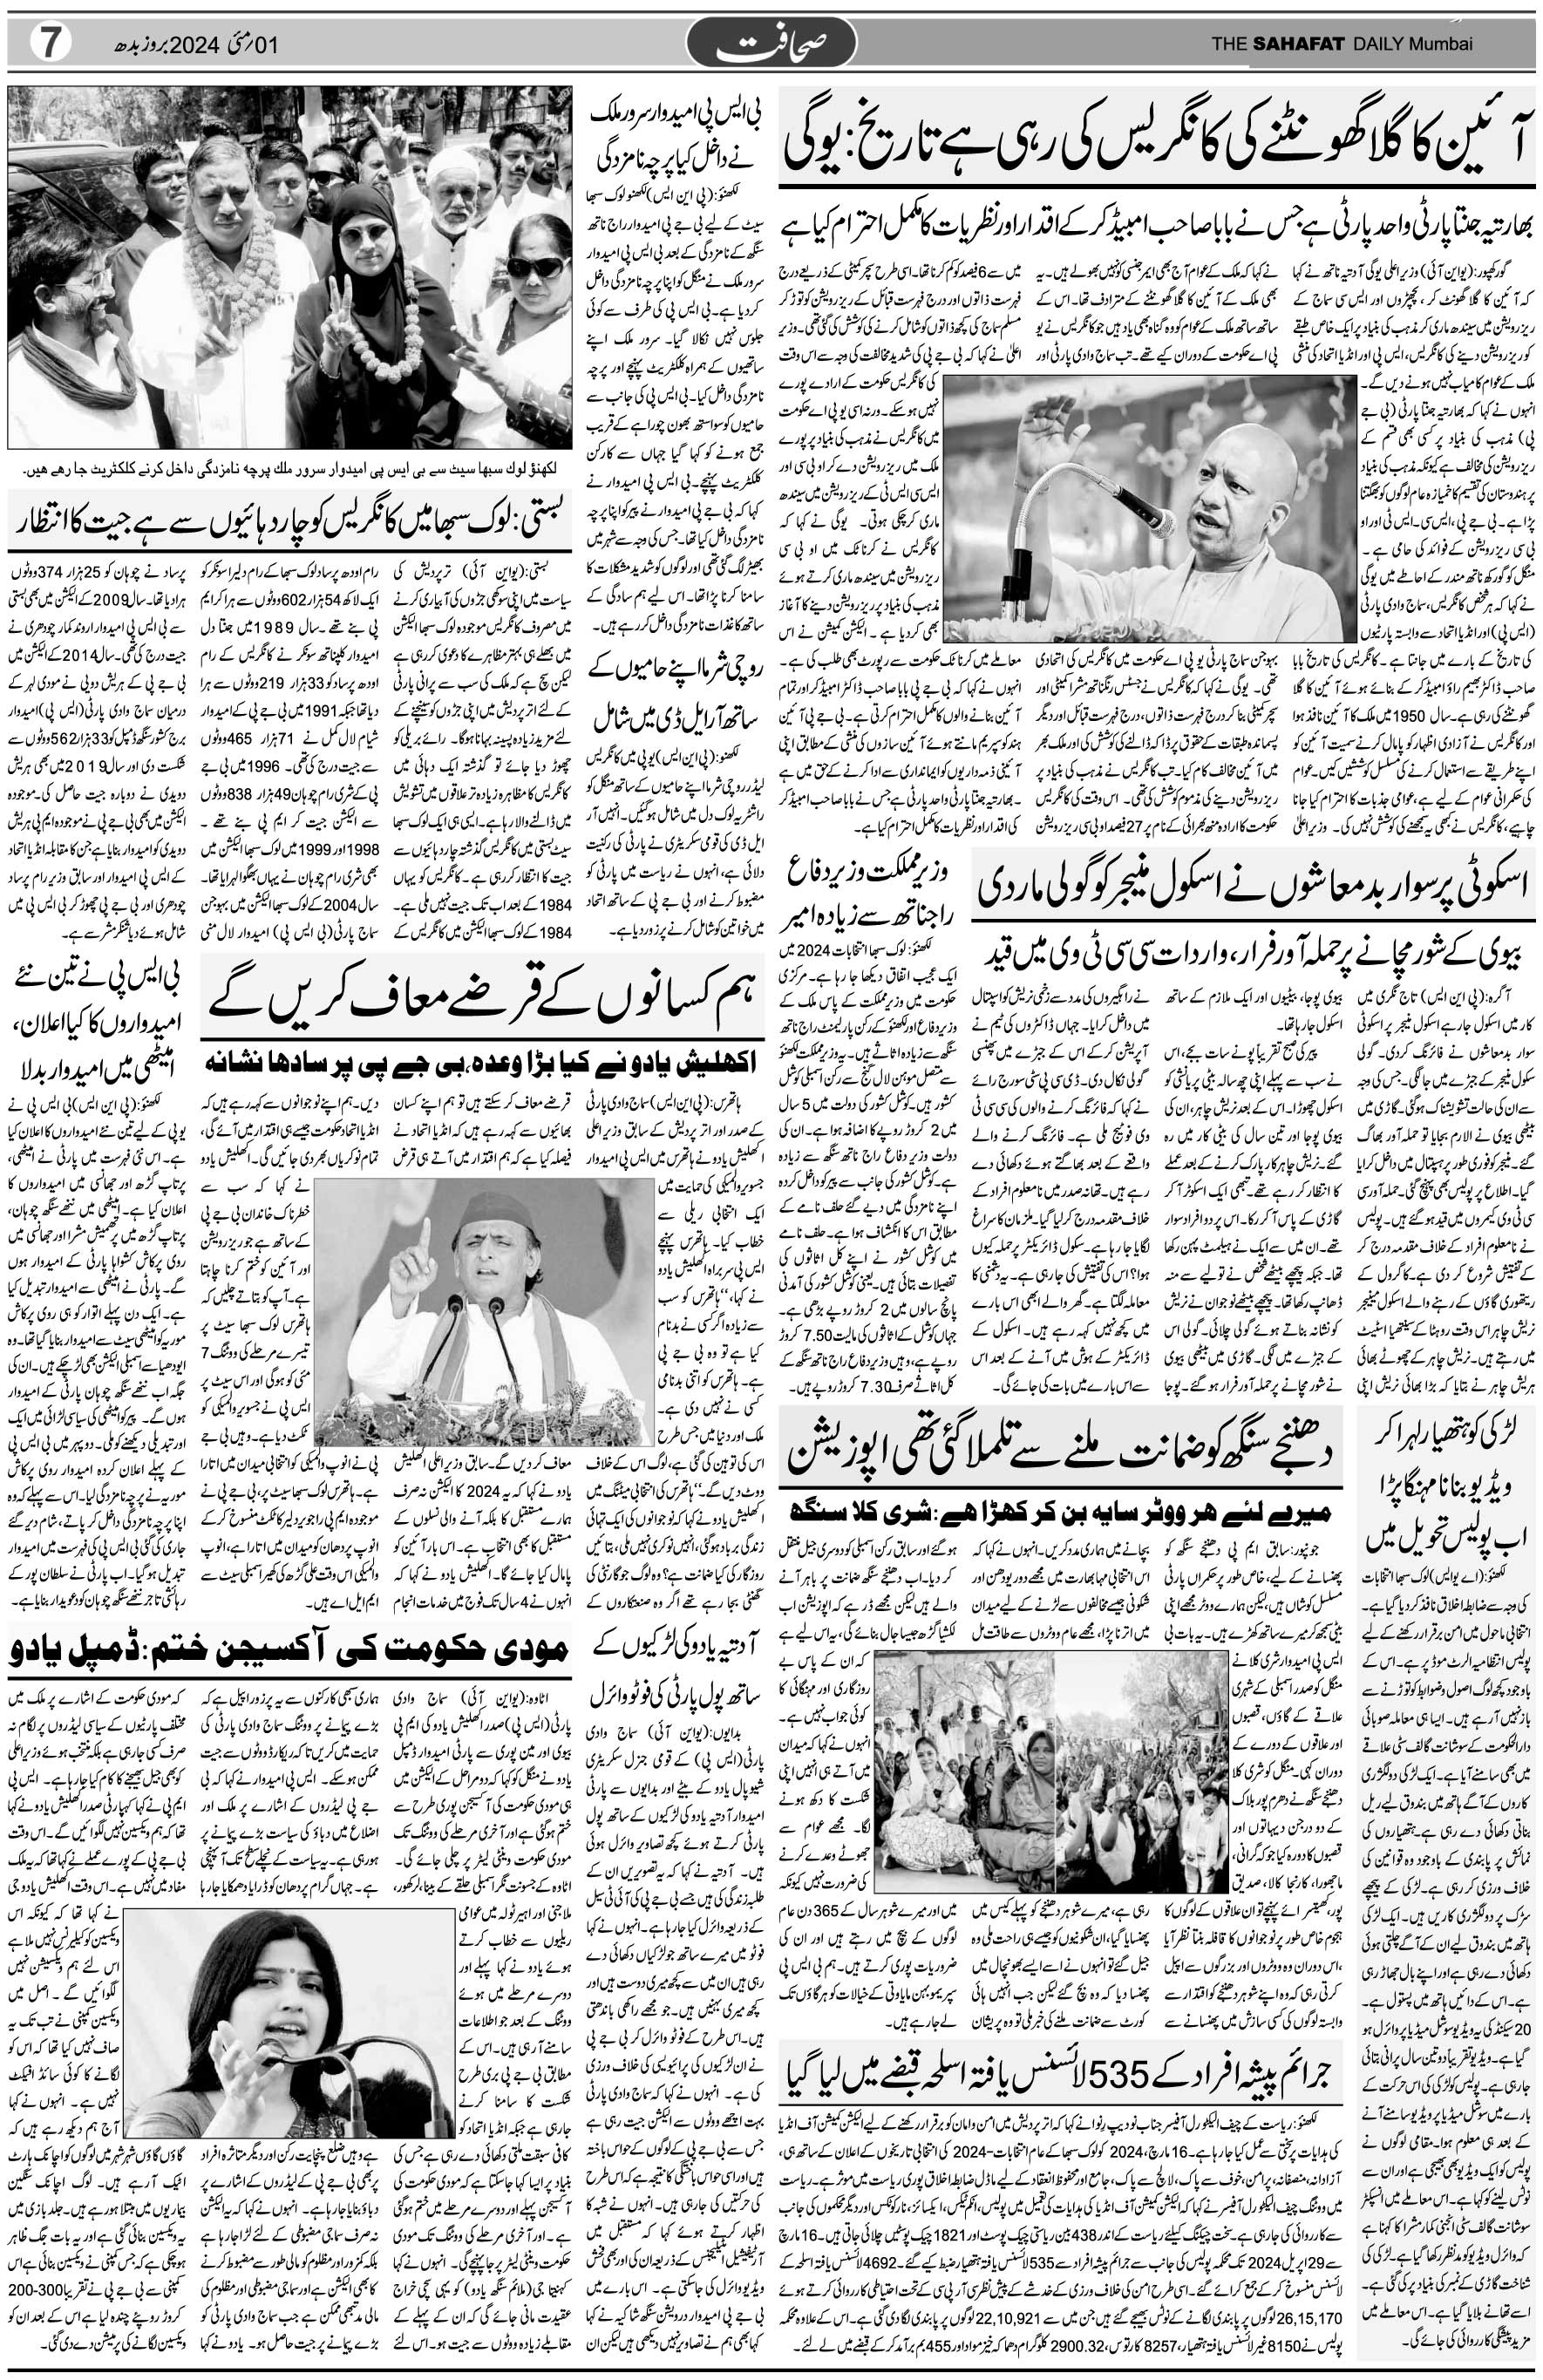 The Sahafat Urdu Daily, Published From Mumbai Maharashtra, India, Hindustan, Epaper Sahafat